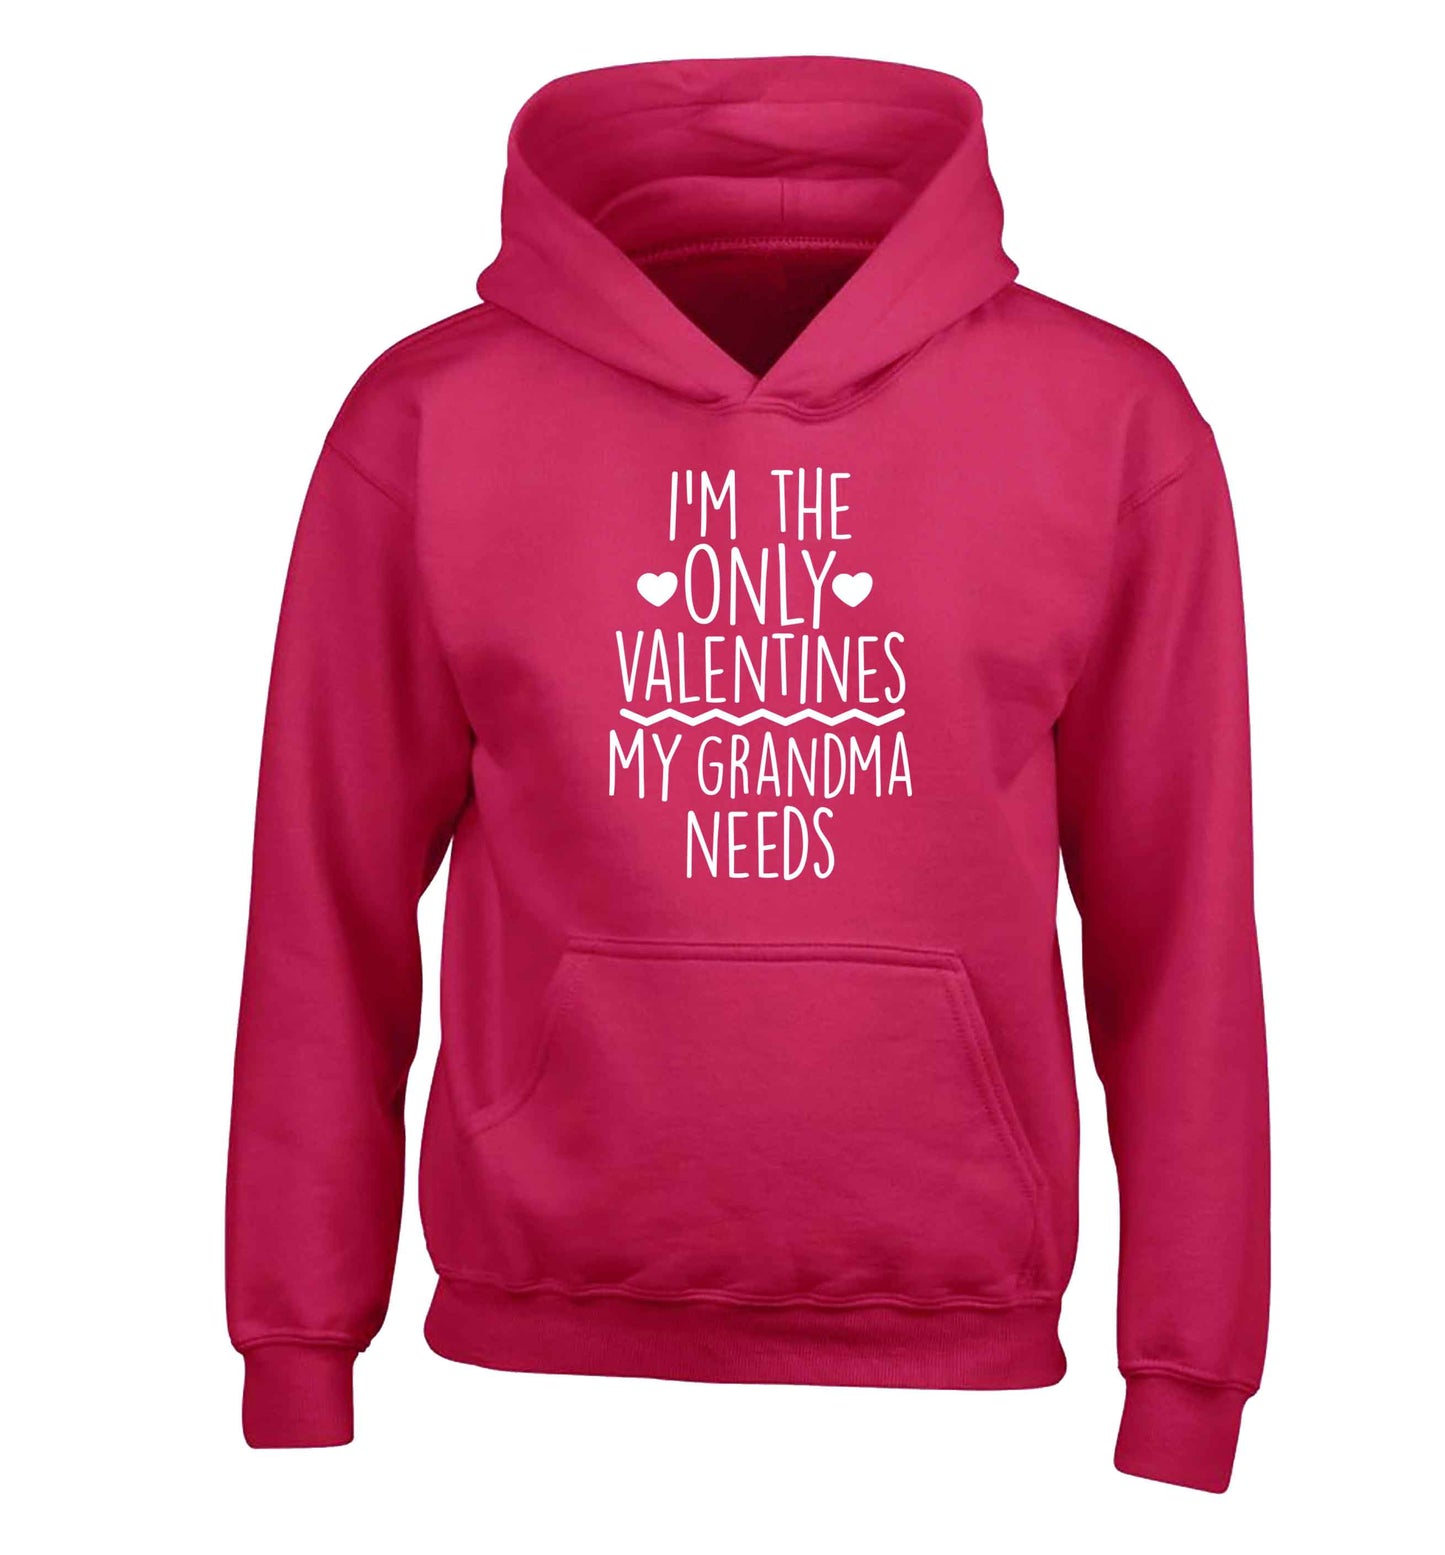 I'm the only valentines my grandma needs children's pink hoodie 12-13 Years